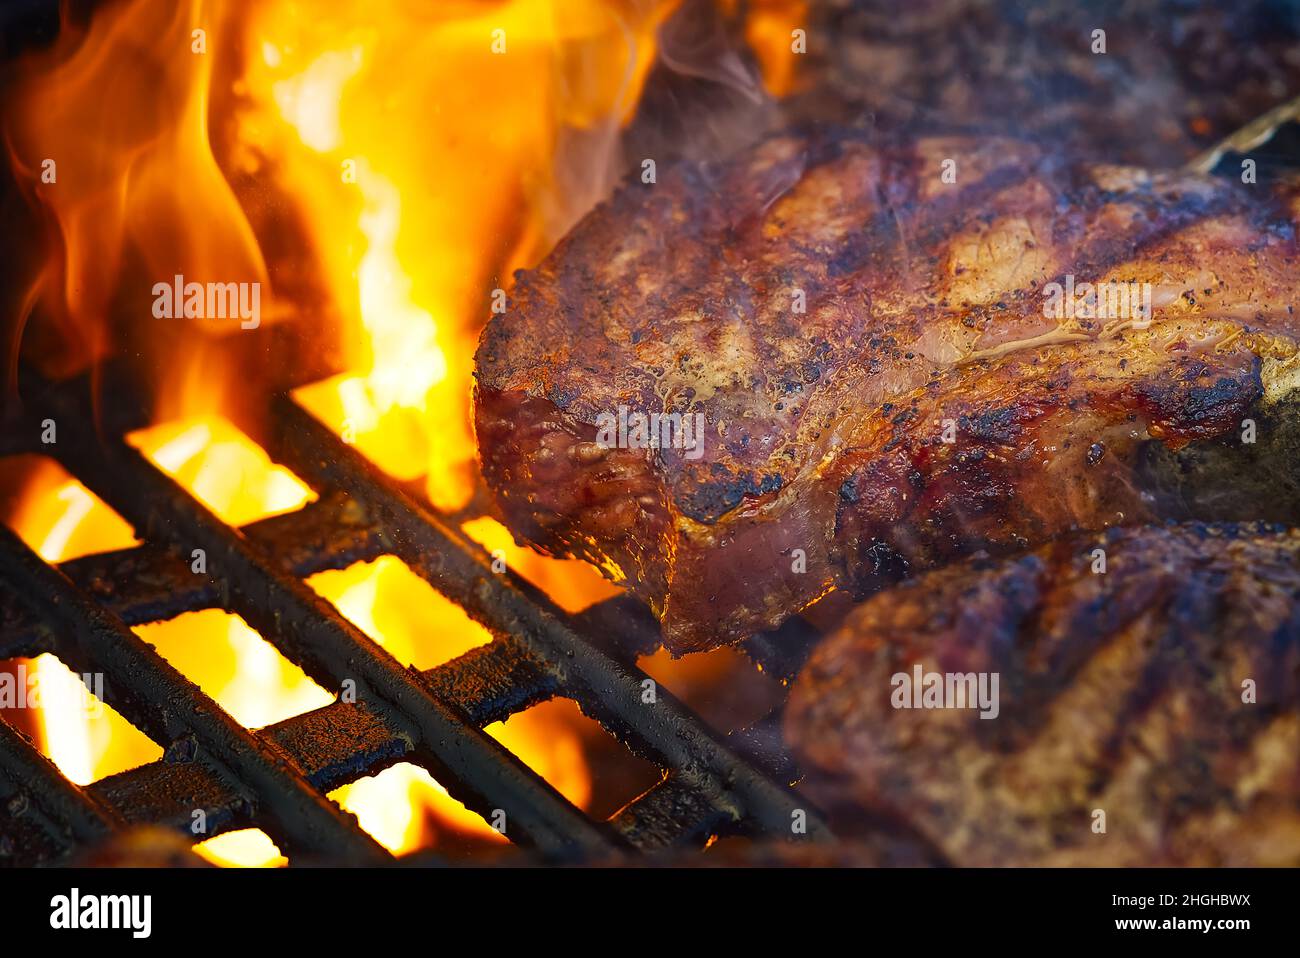 Rib eye steaks grilled outdoors Stock Photo - Alamy